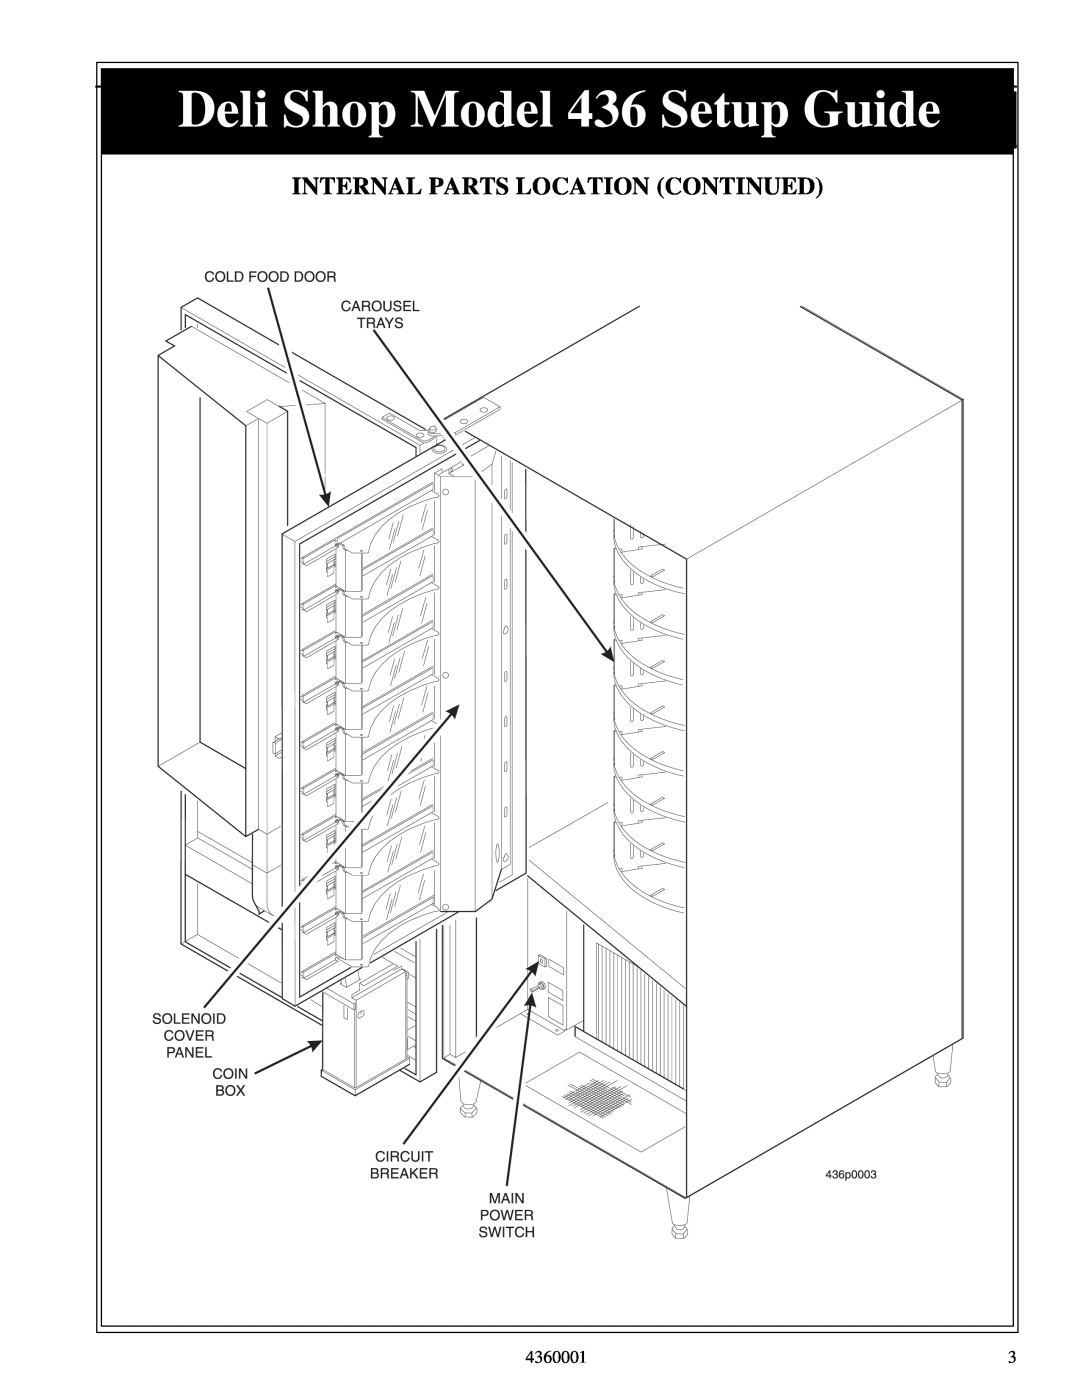 Crane Merchandising Systems manual Deli Shop Model 436 Setup Guide, Internal Parts Location Continued, 4360001 